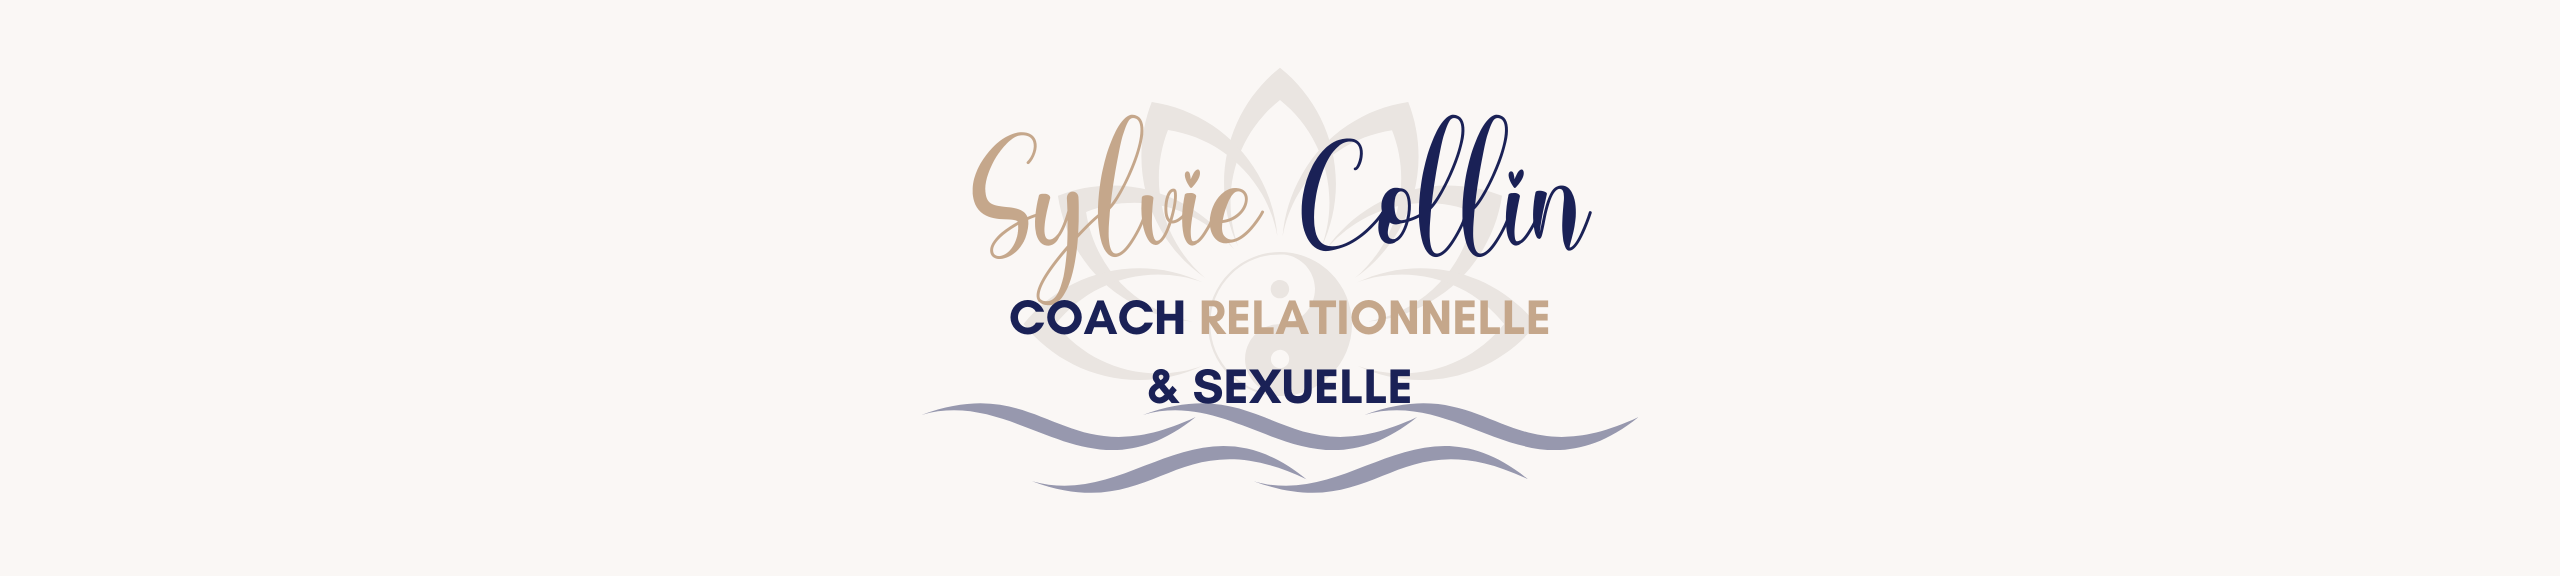 Sylvie Collin_Coach relationnel